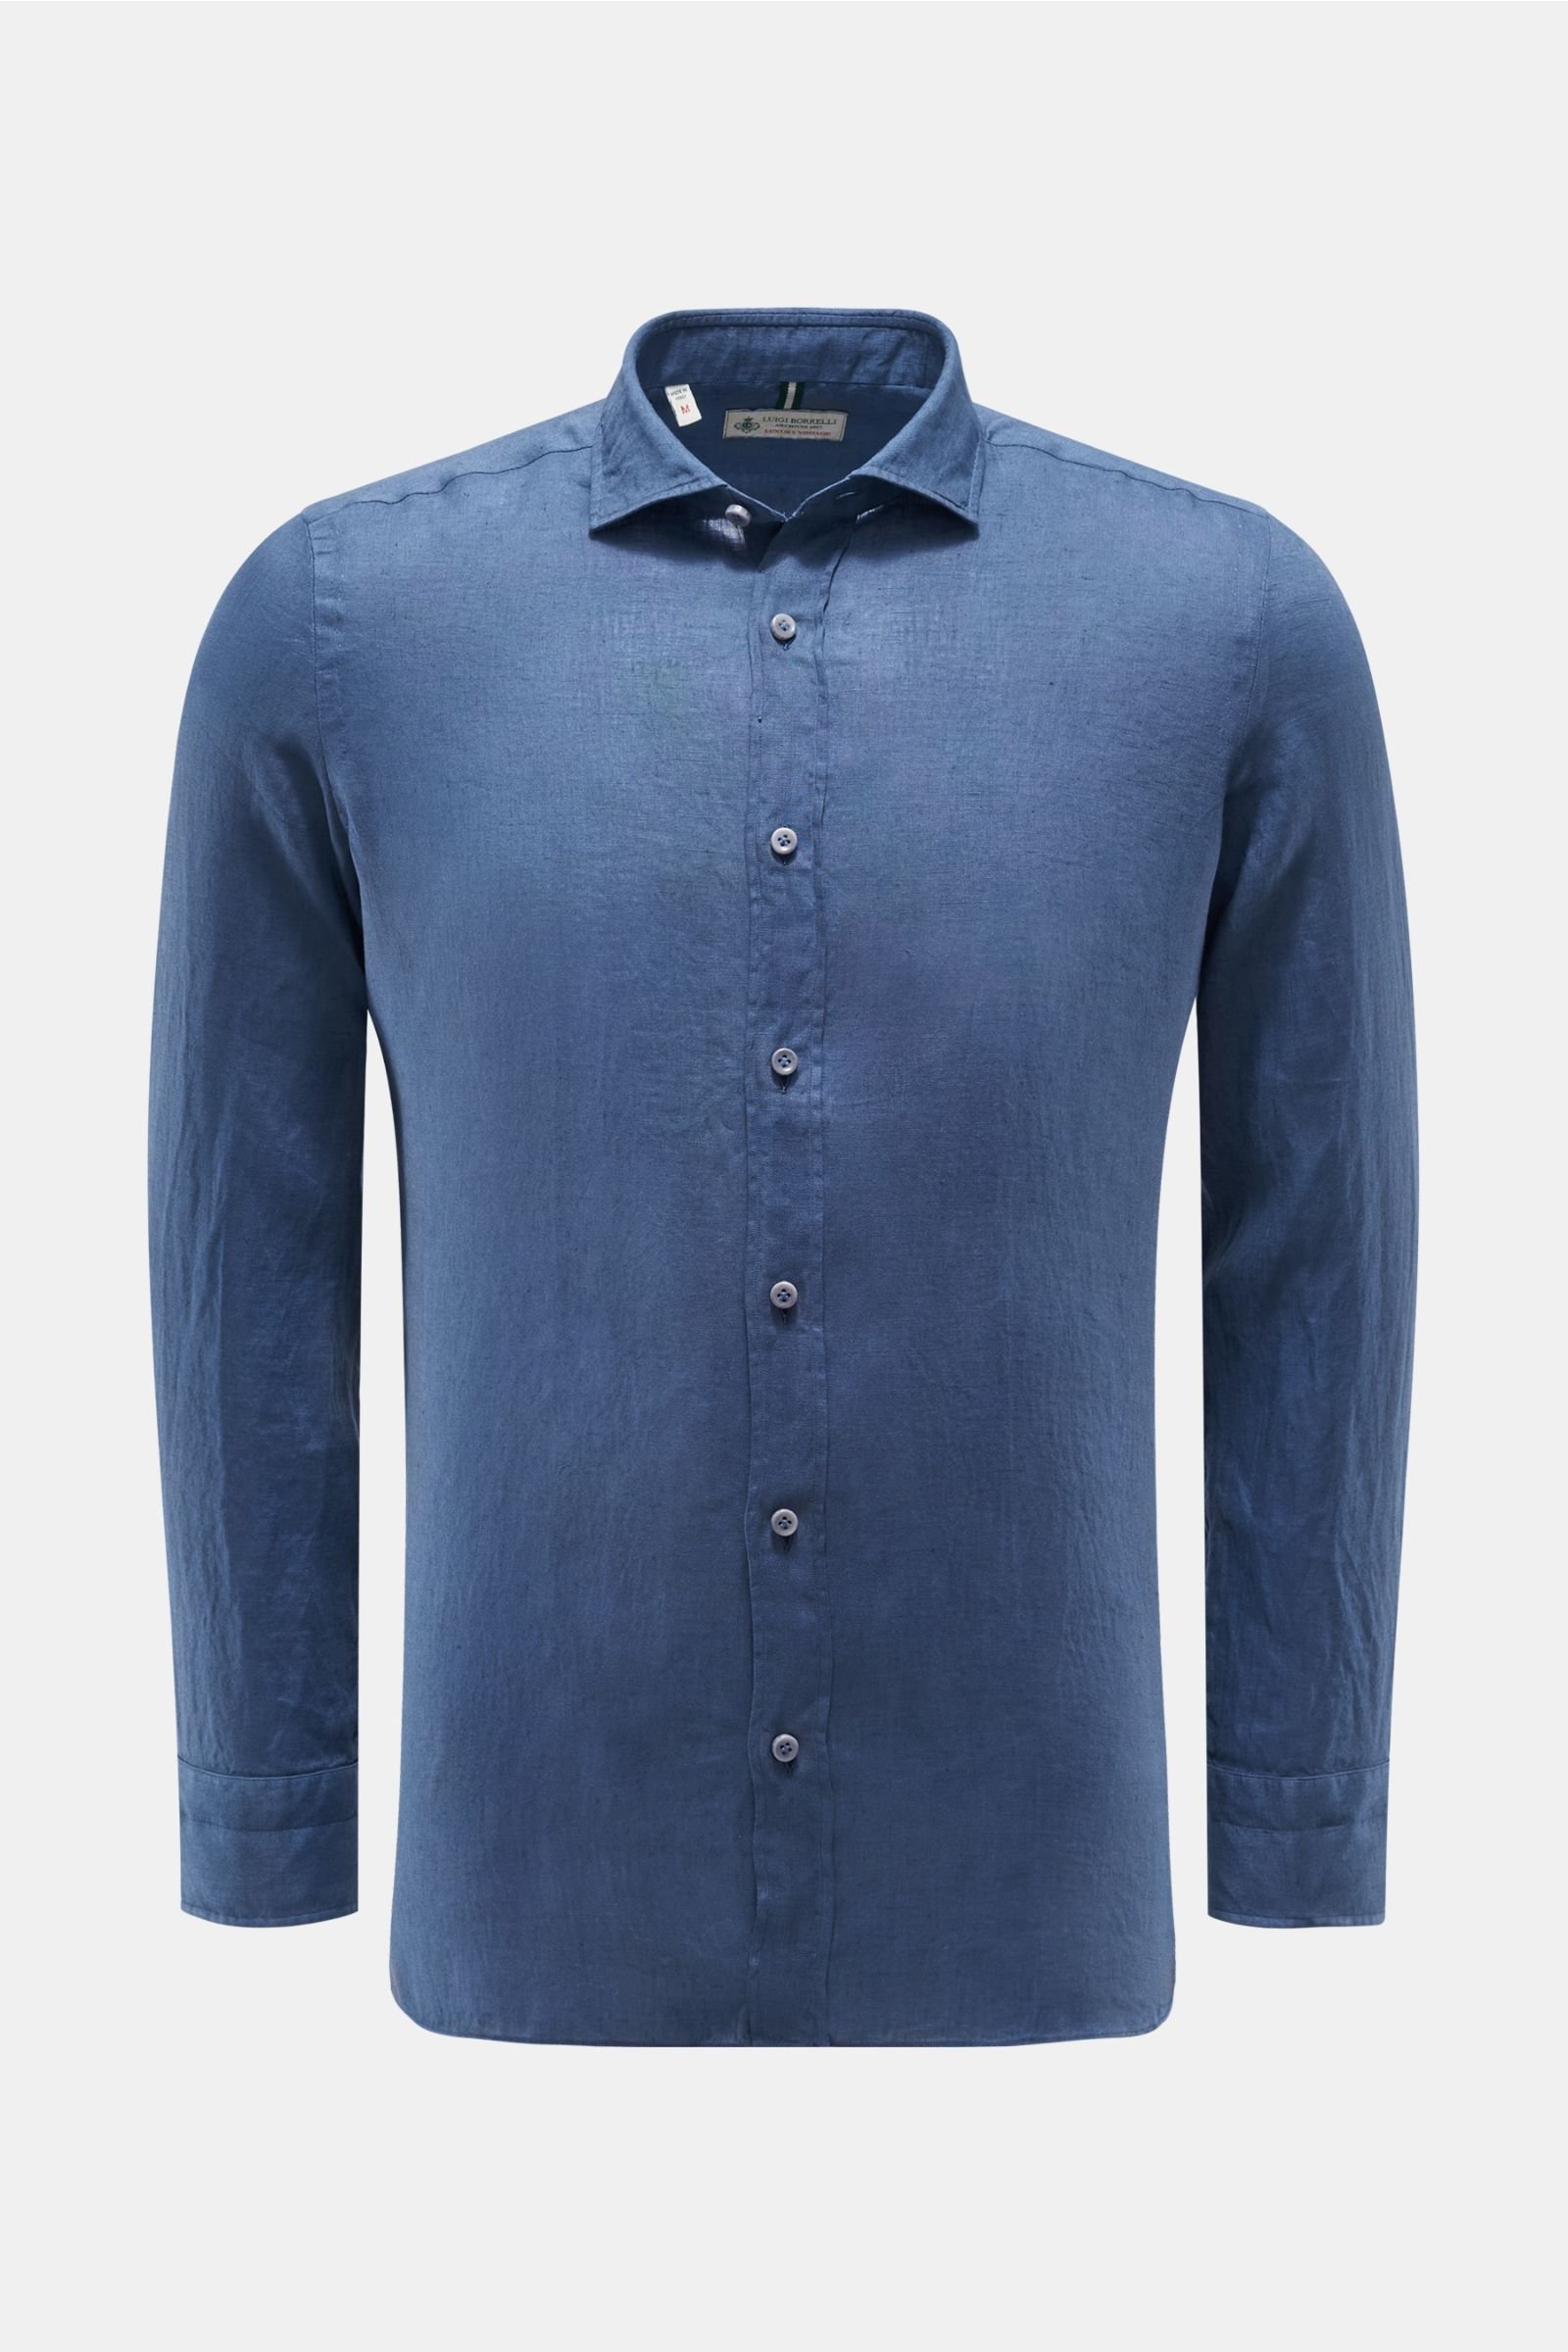 Linen shirt 'Positano' shark collar grey-blue